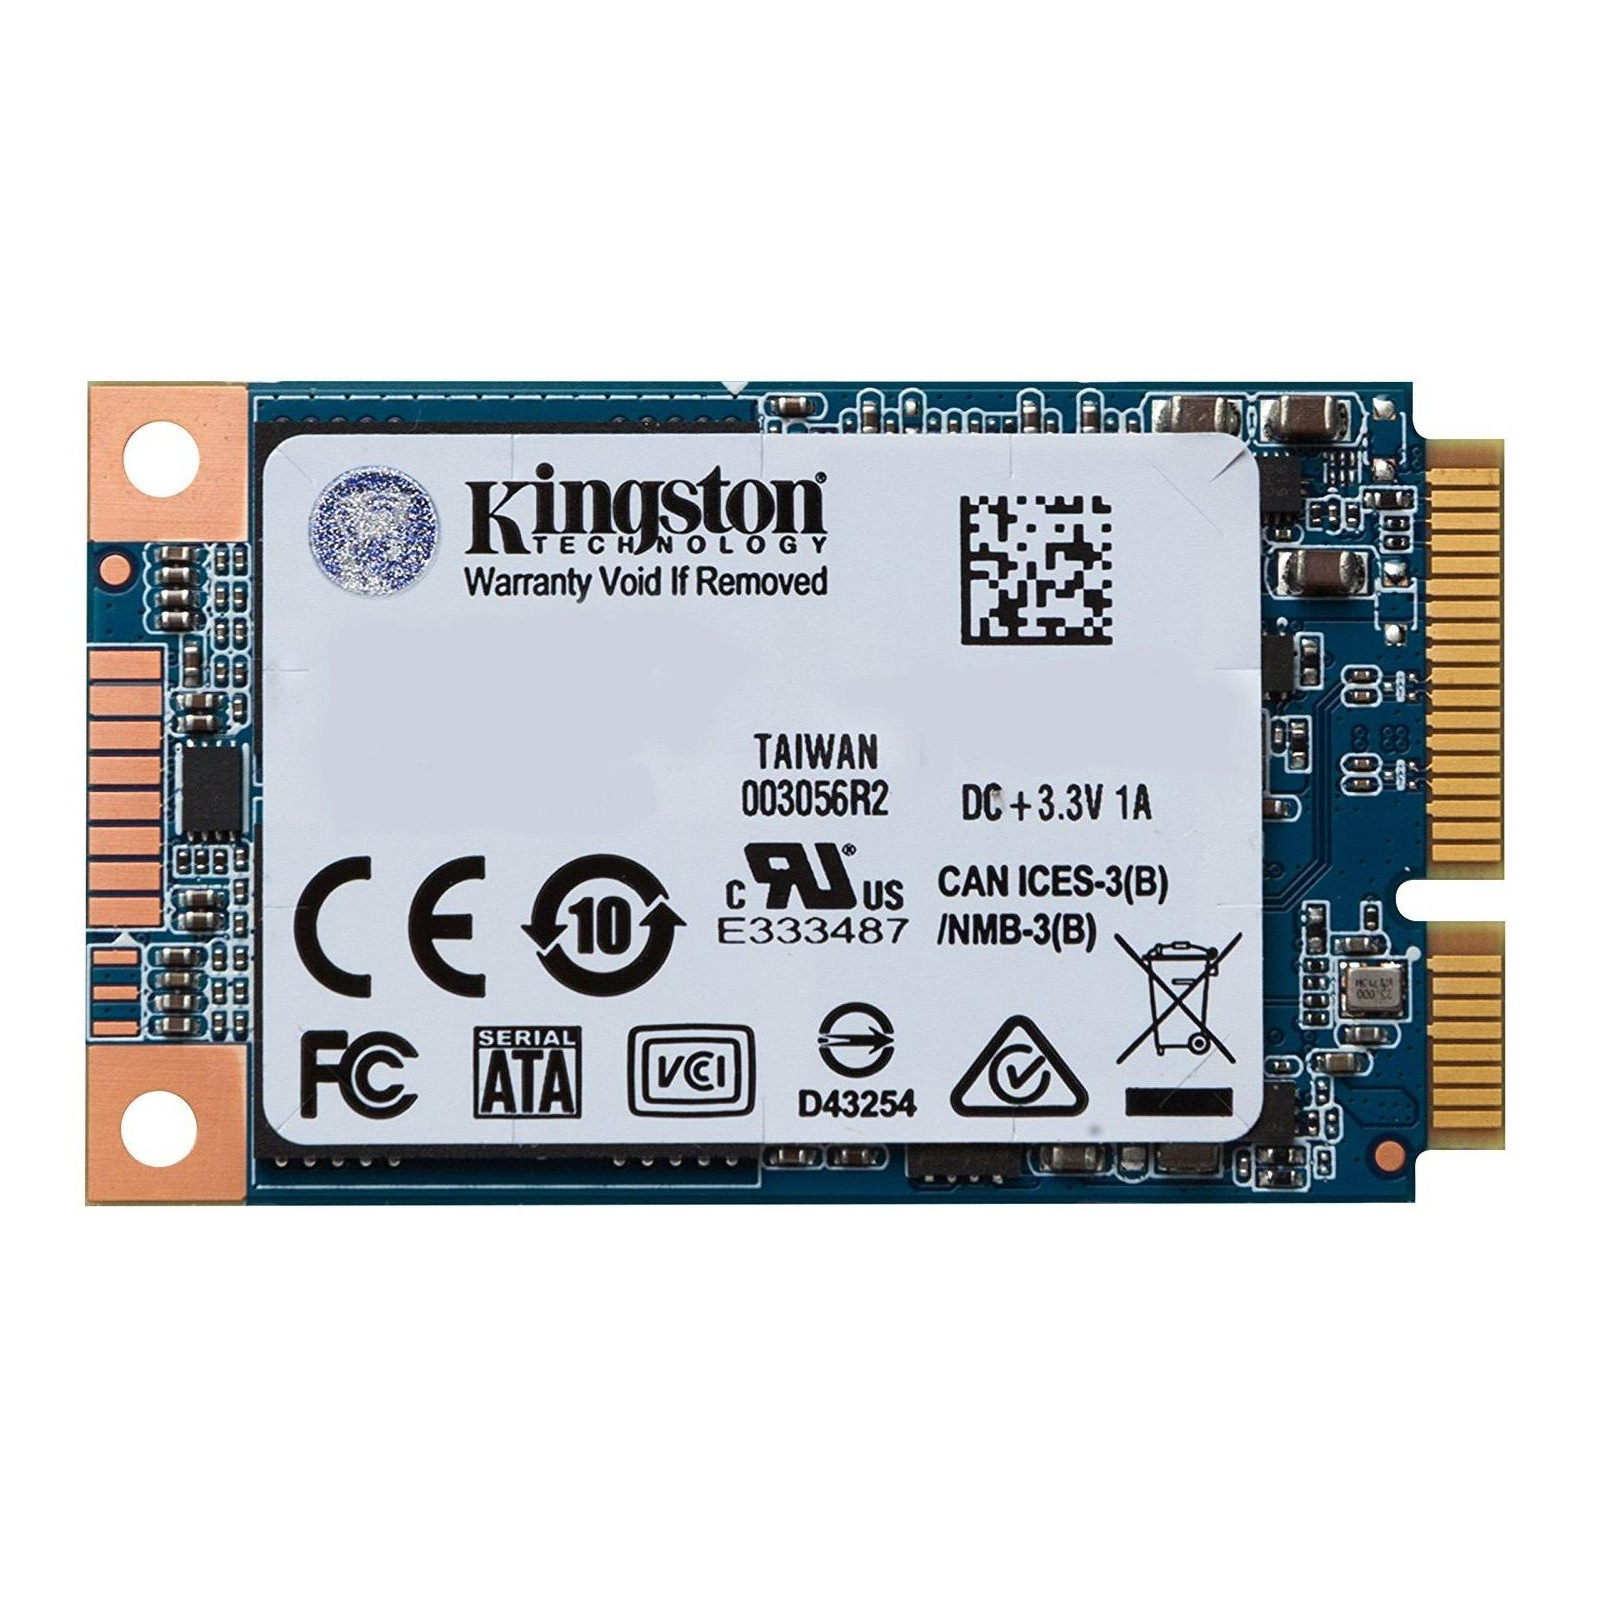 Накопитель SSD mSATA 240GB Kingston (SUV500MS/240G)